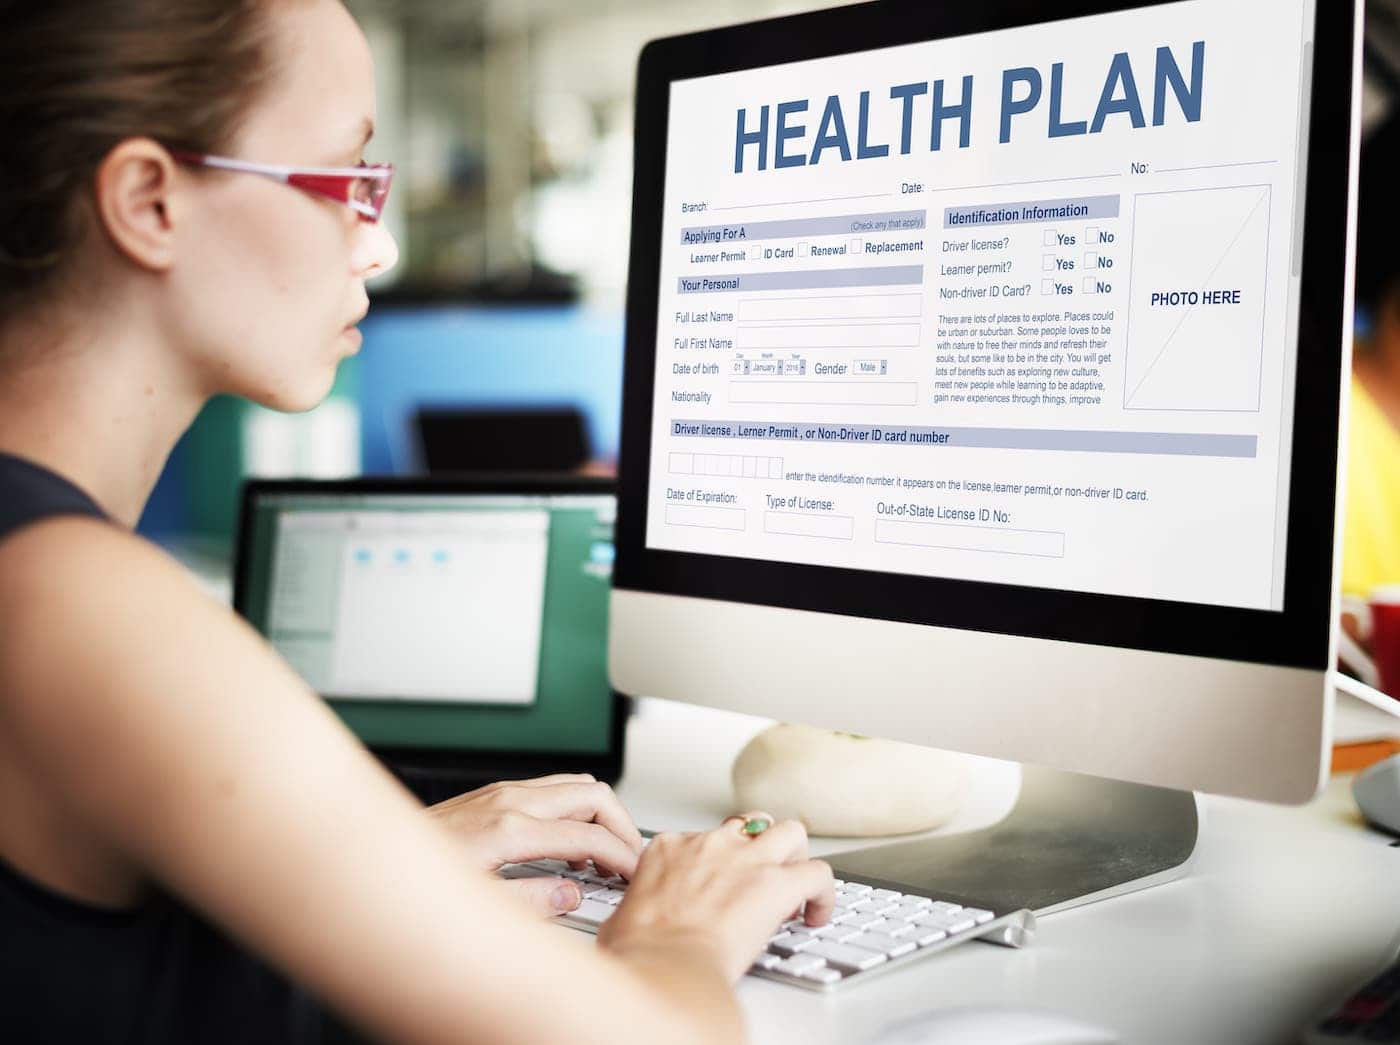 Health-Plan-Information-Examination-Concept